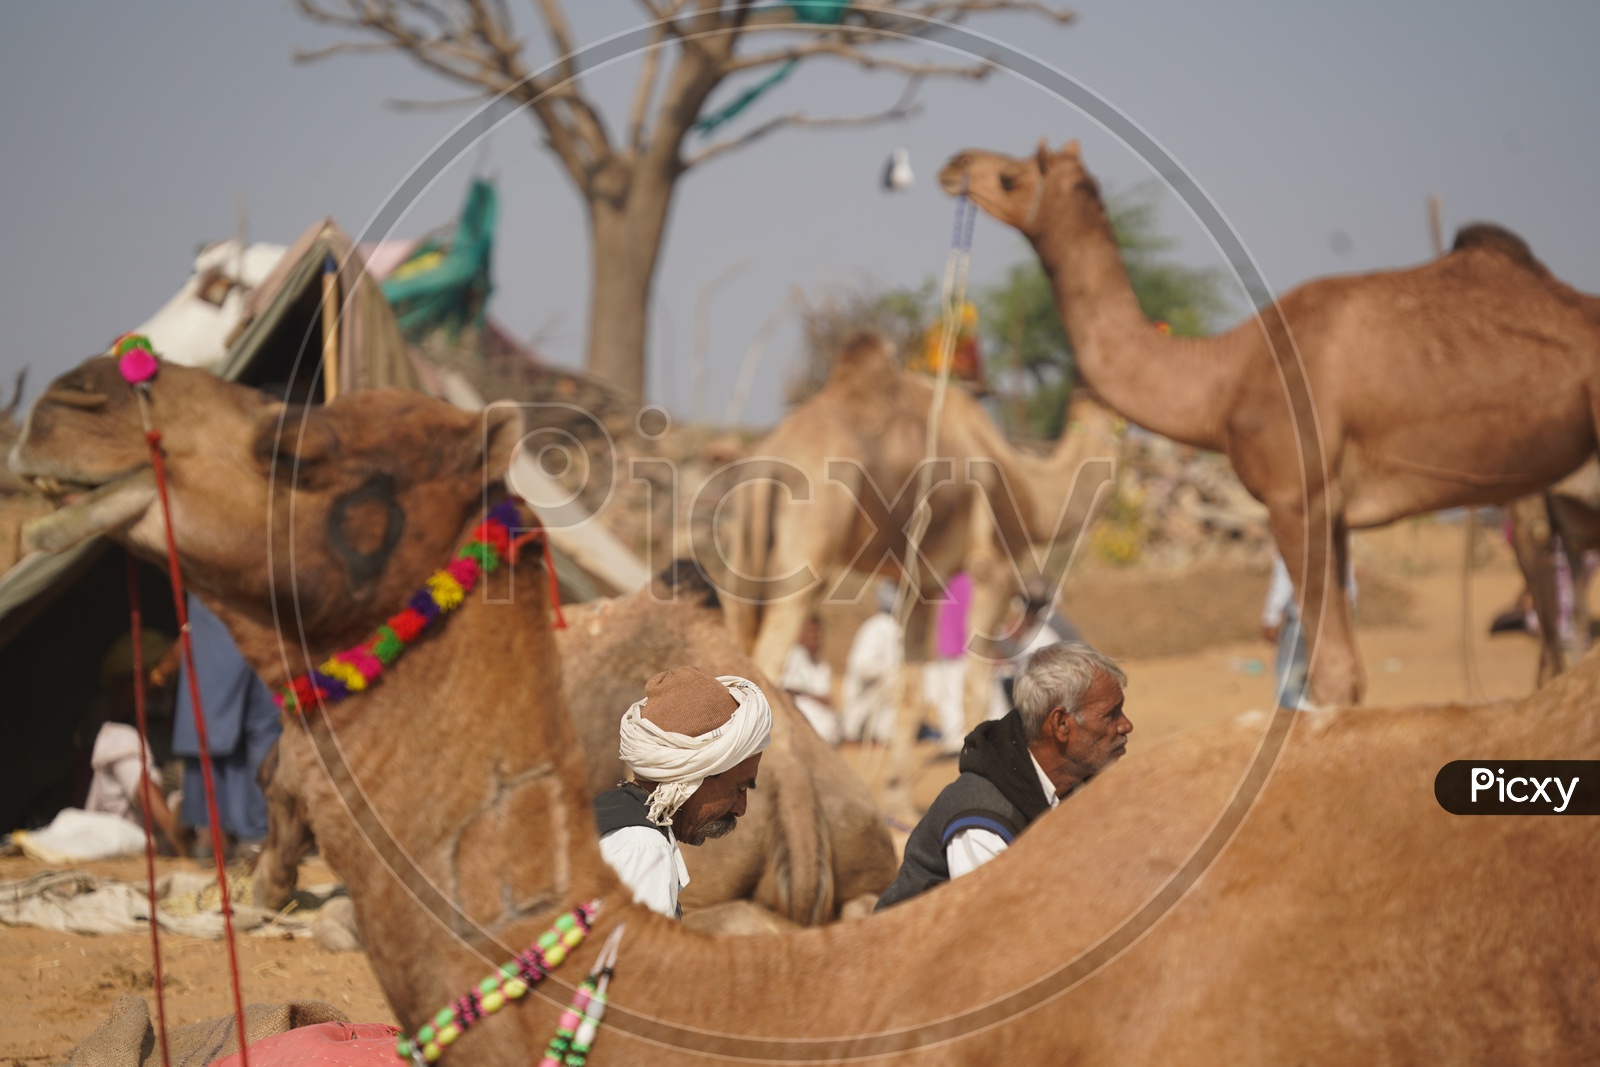 Cameles / camelestrian with their Camels in Pushkar Camel Fair